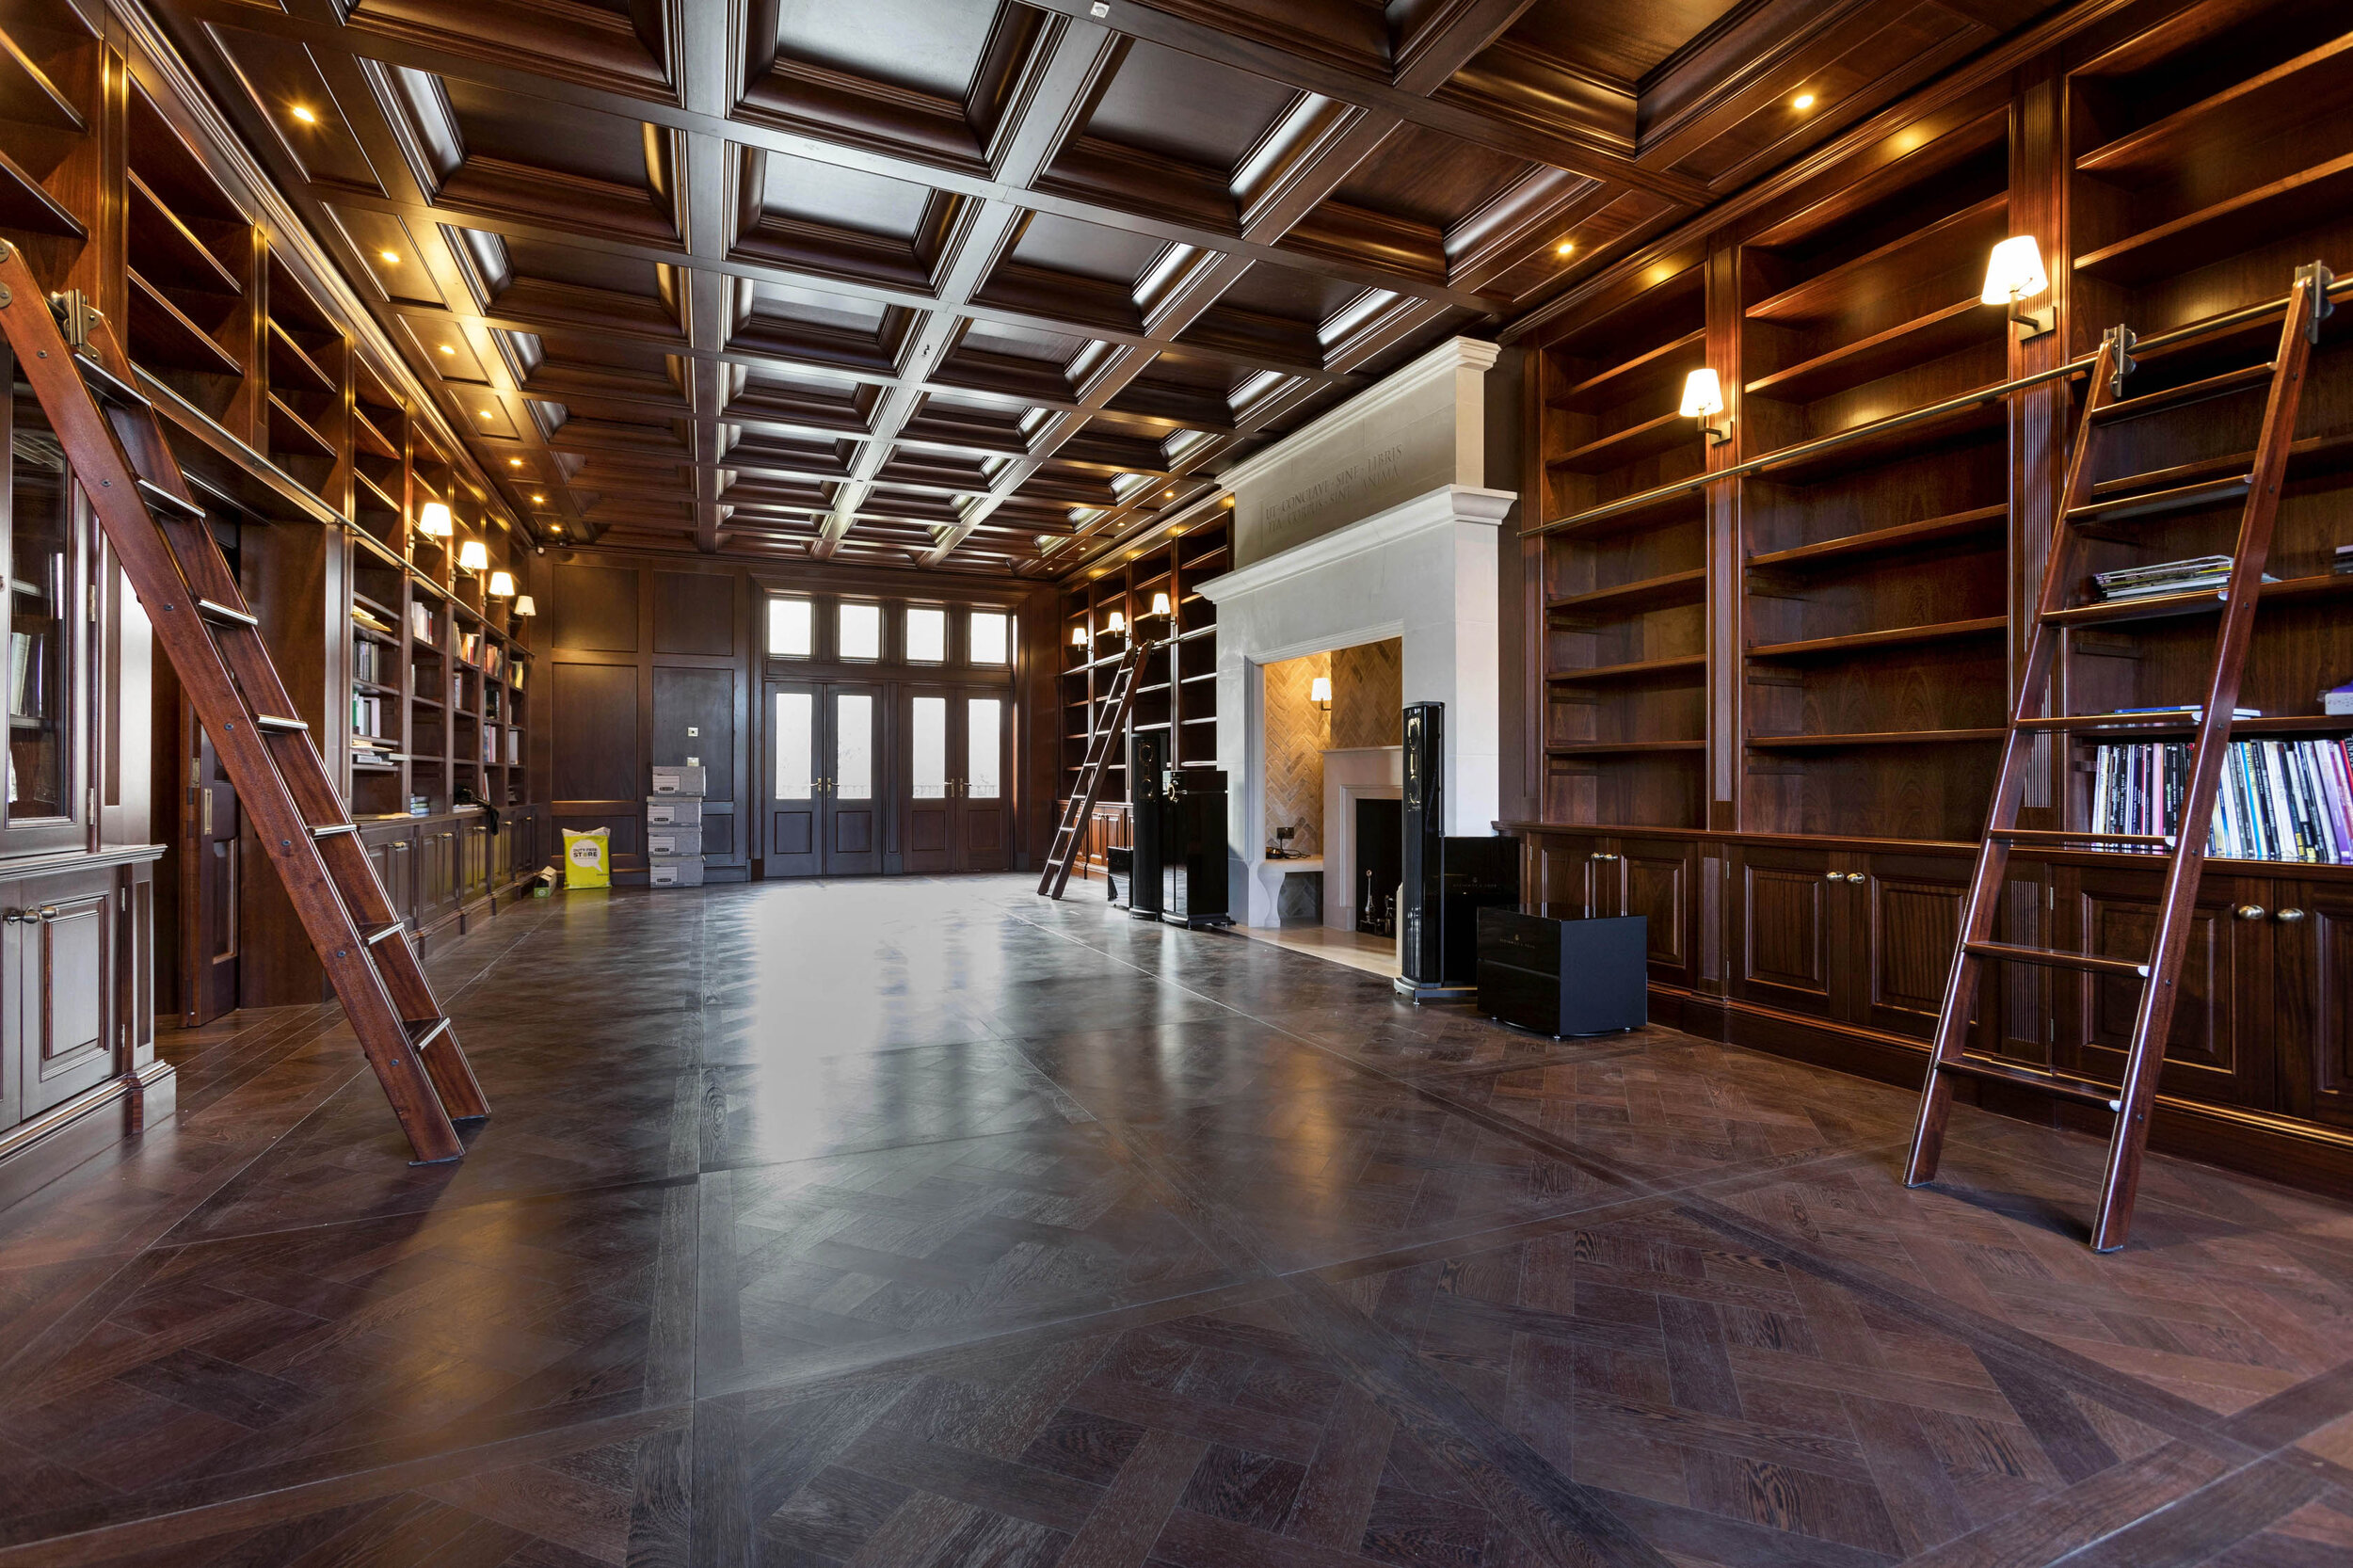 private wooden library room designed sound system thebestshot.co.uk.jpg